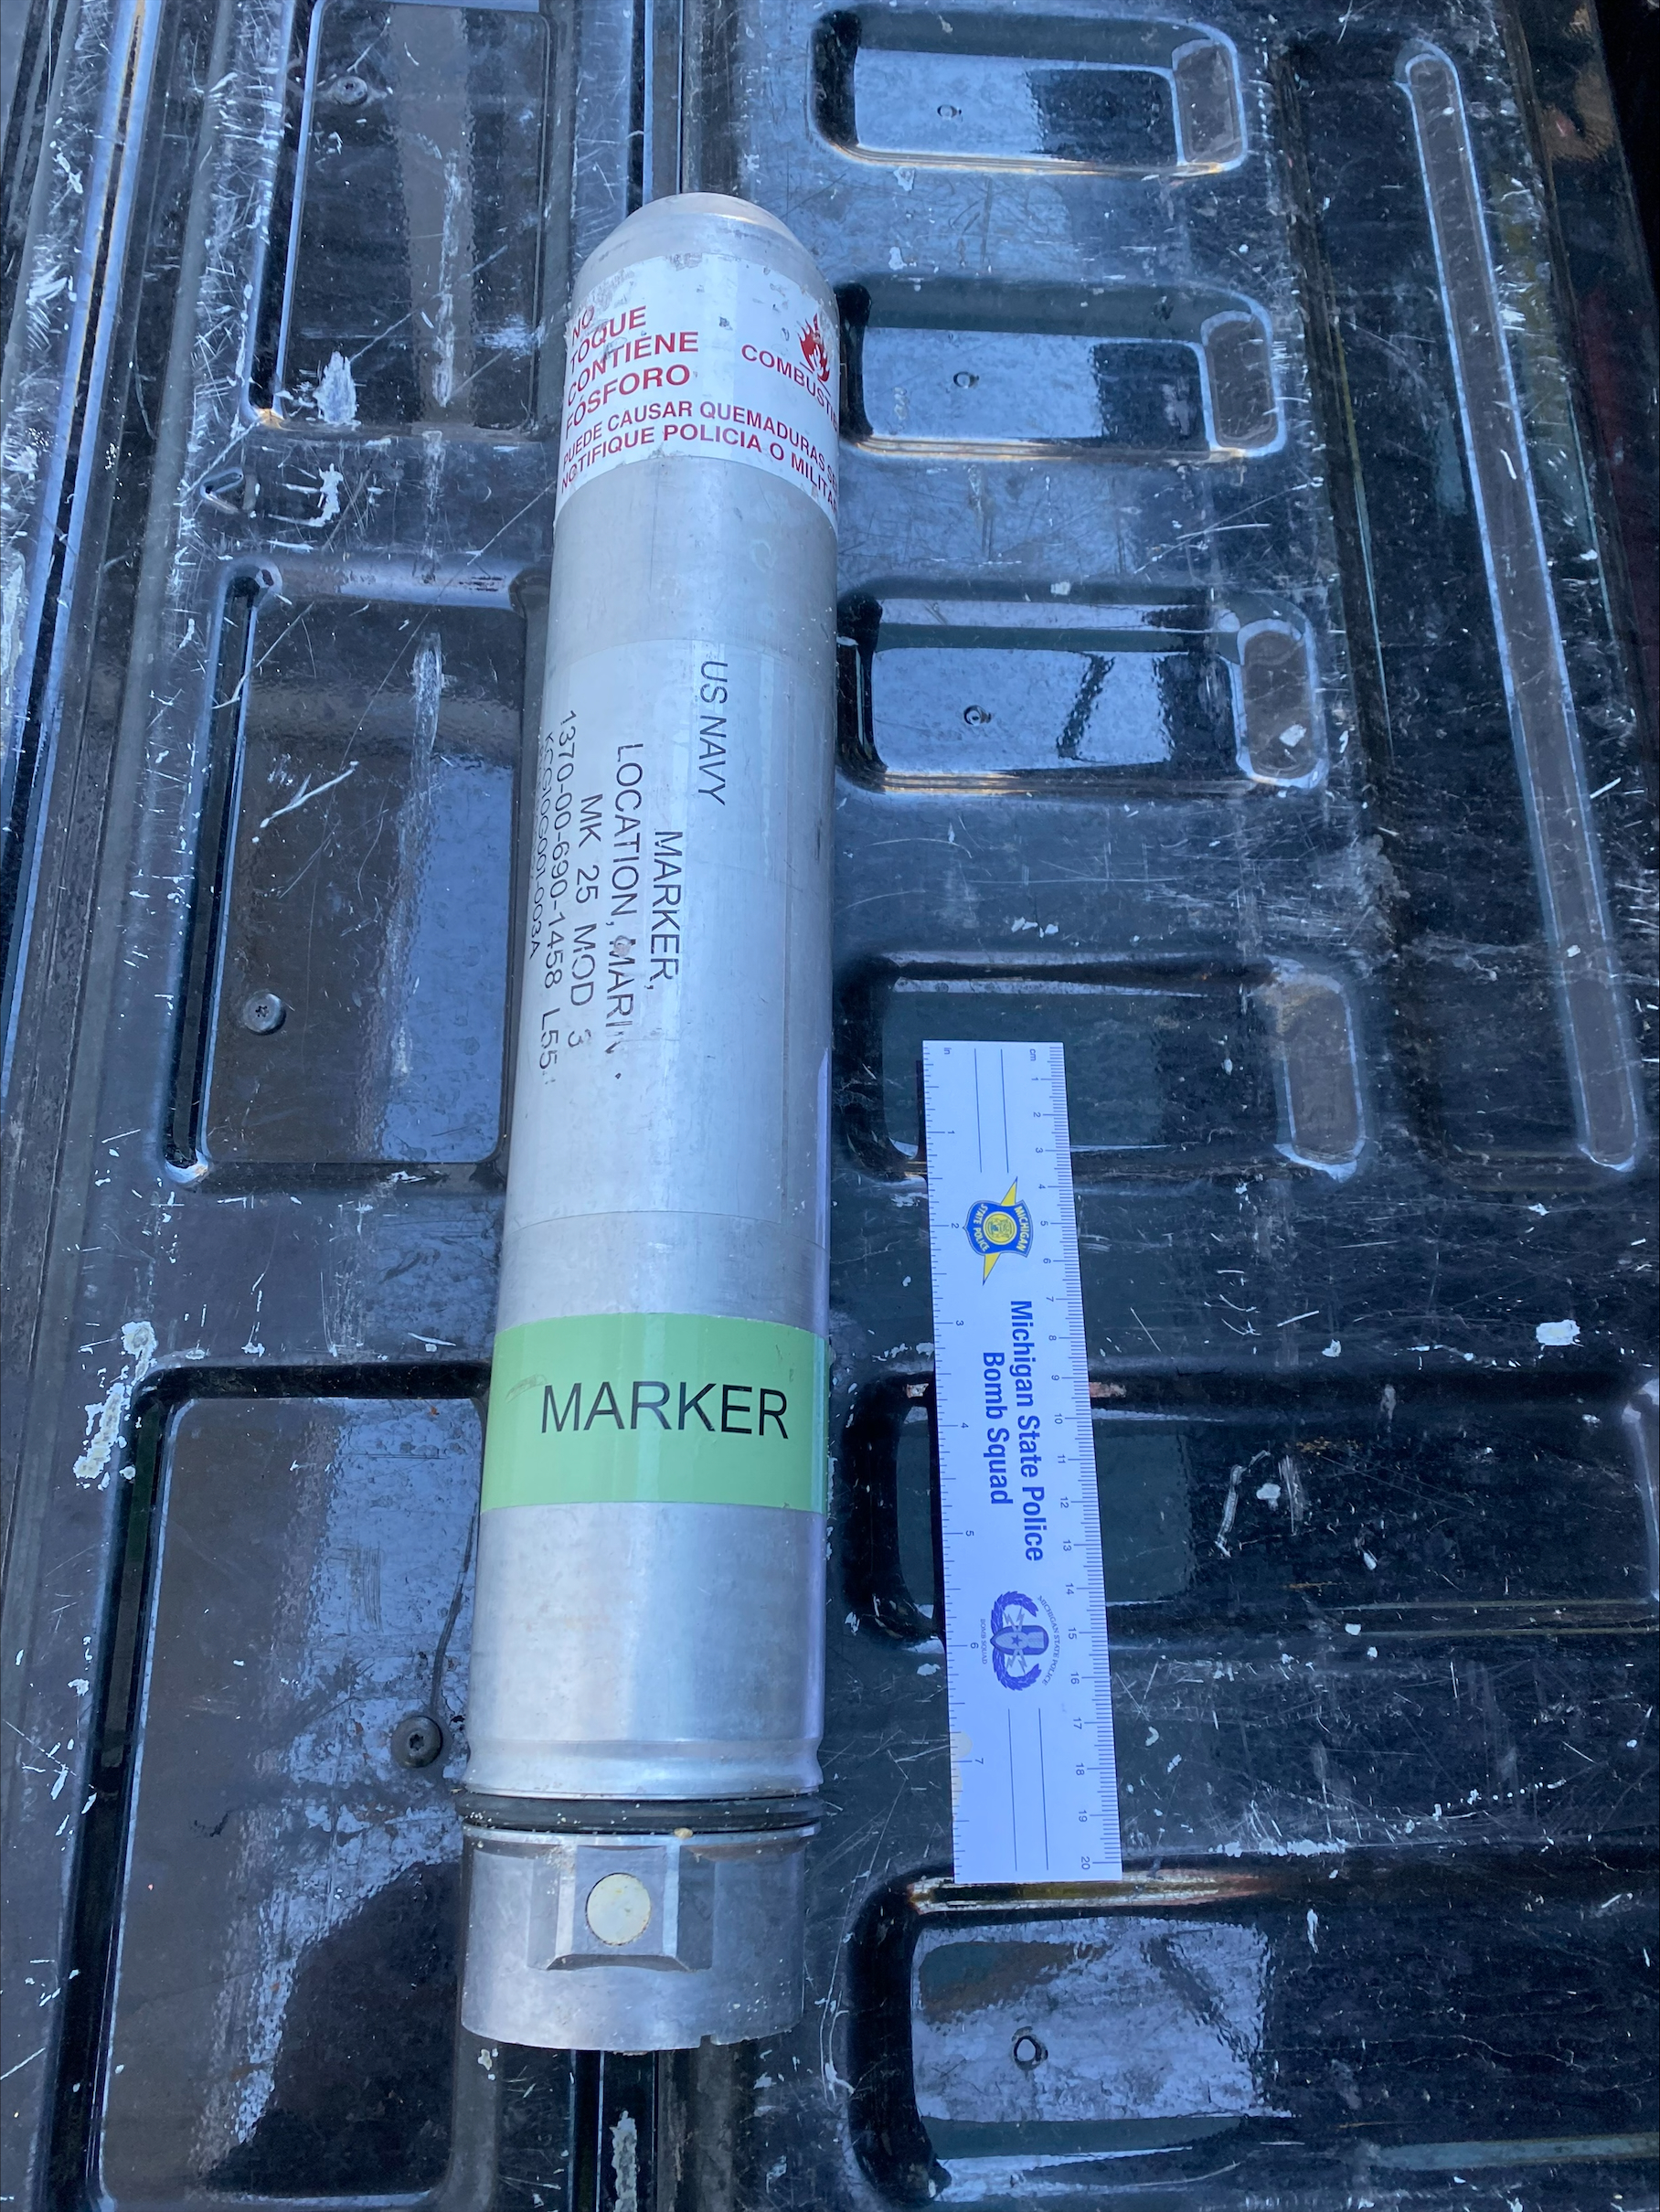 Mark-25 Marine Marker military flare (MSP Bomb Squad)